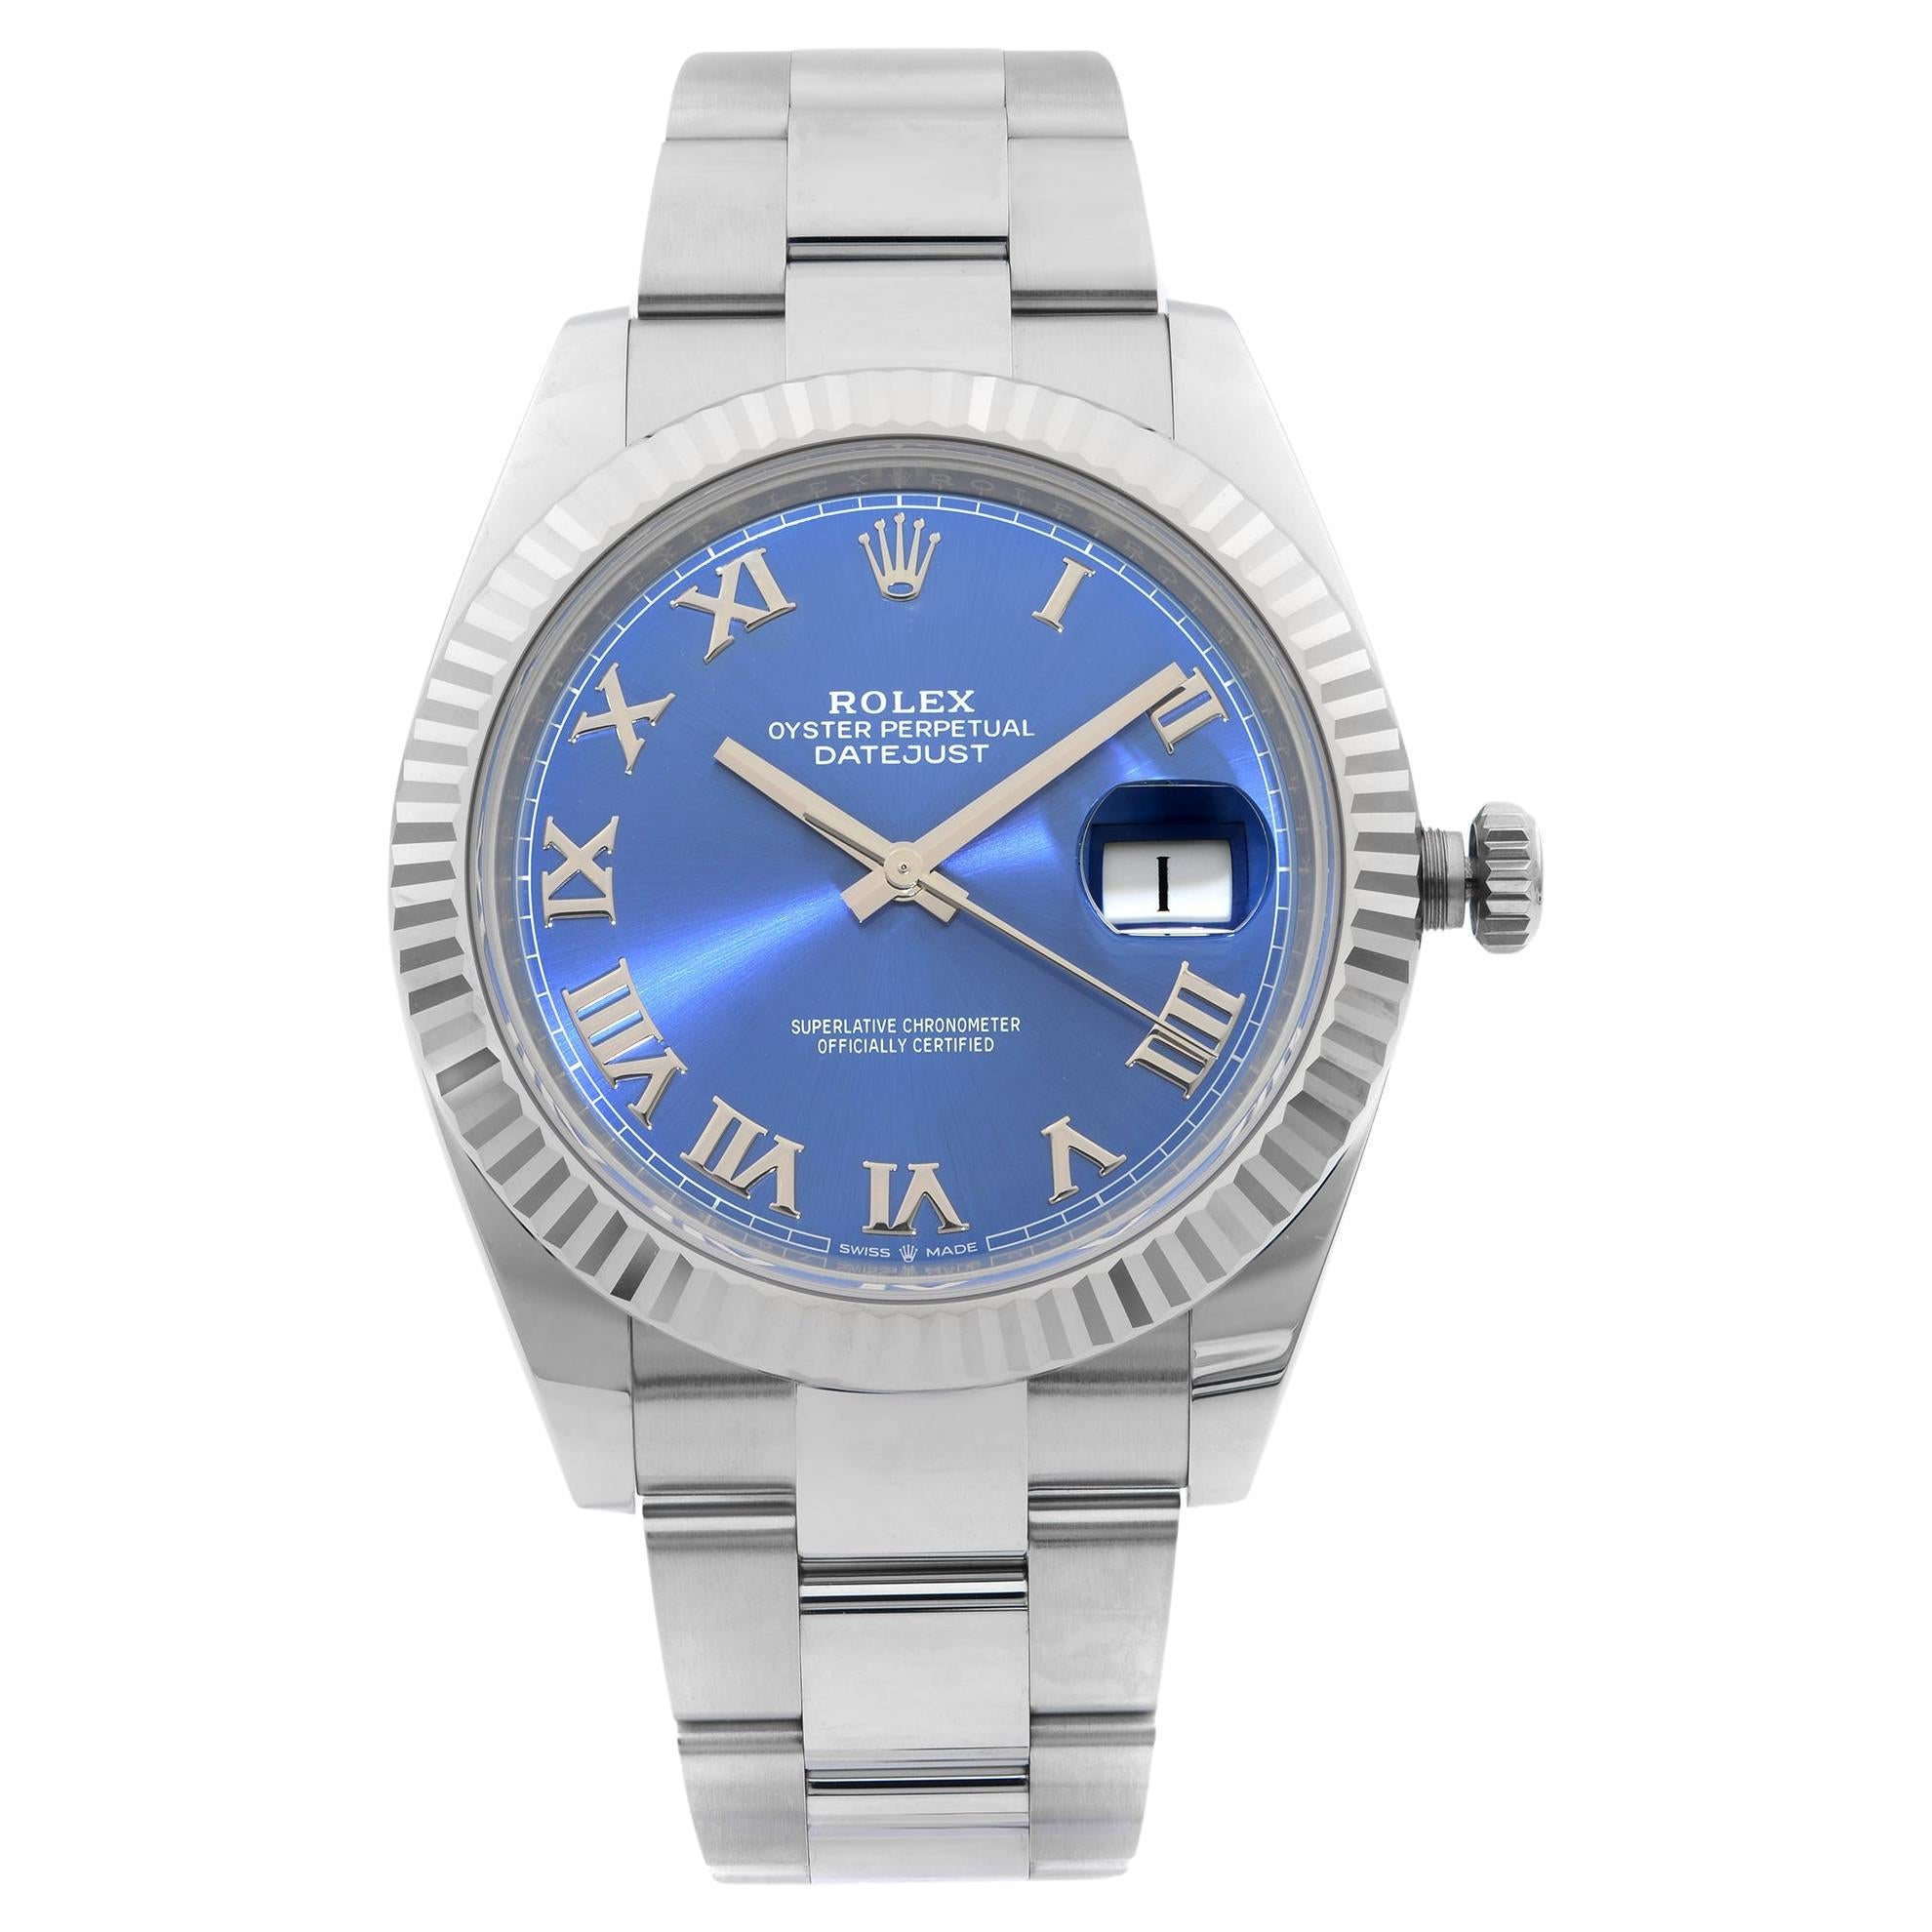 Rolex Datejust Oyster Band Steel 18K Gold Bezel Blue Dial Watch 126334 Unworn For Sale